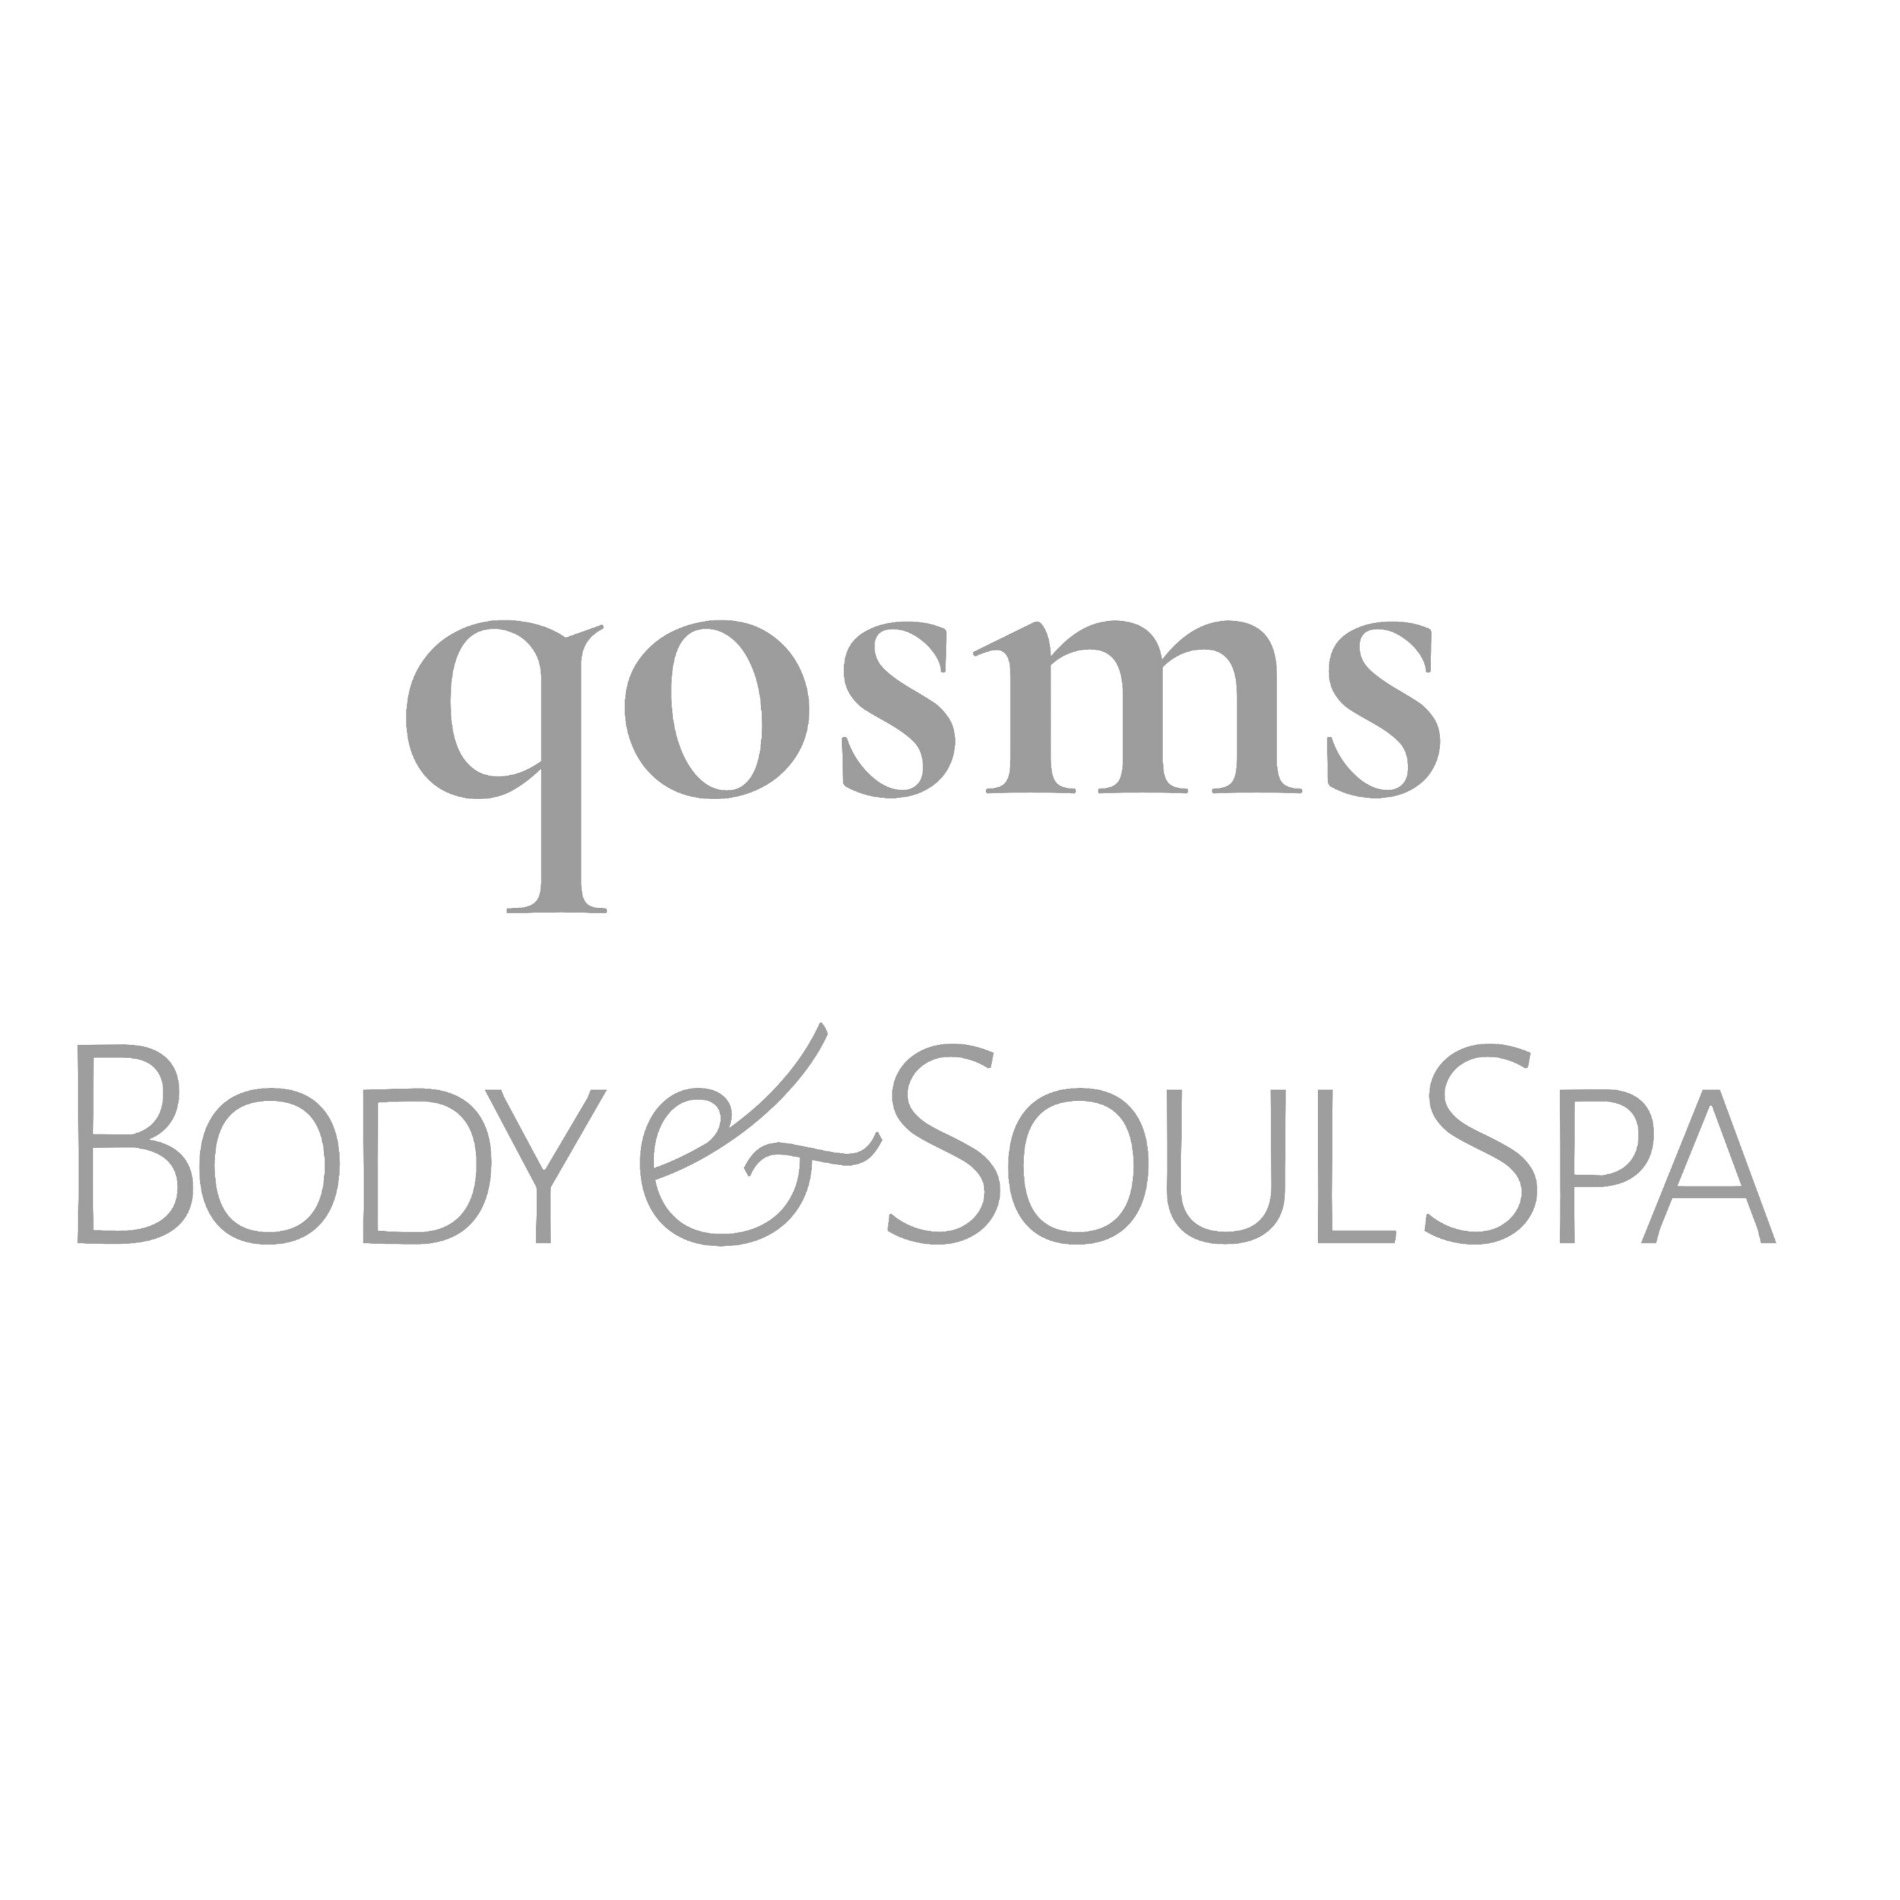 qosms Body & Soul Spa Logo